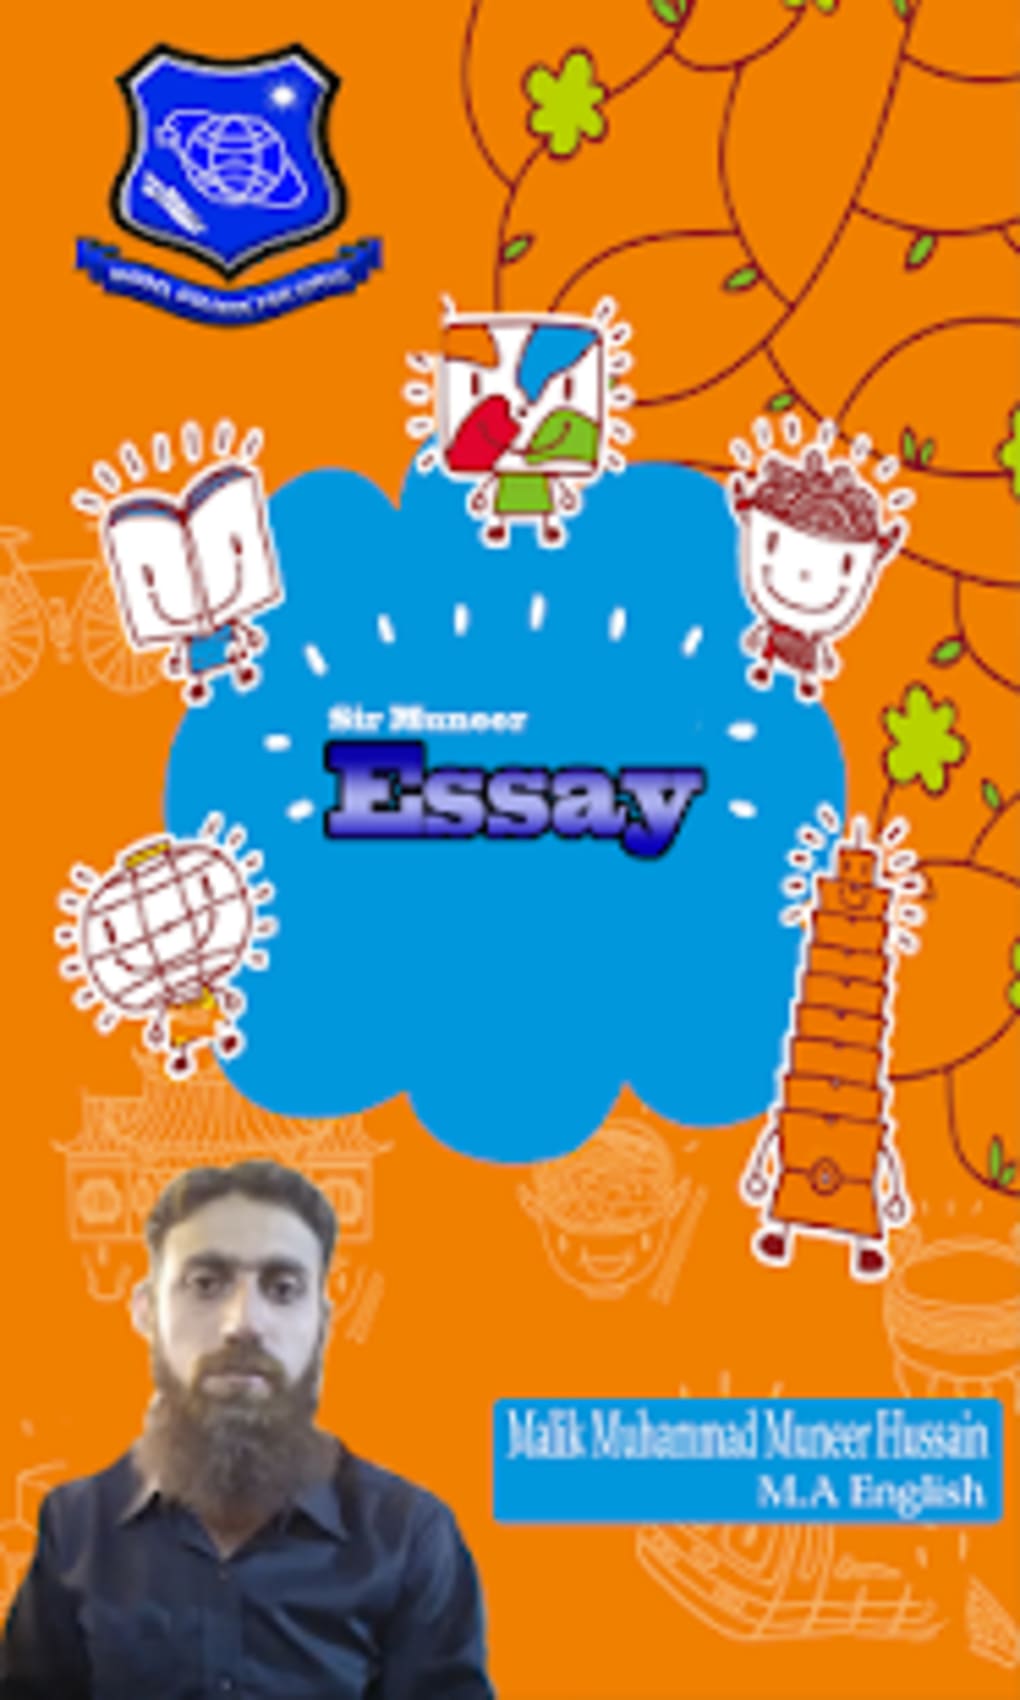 download english essay app